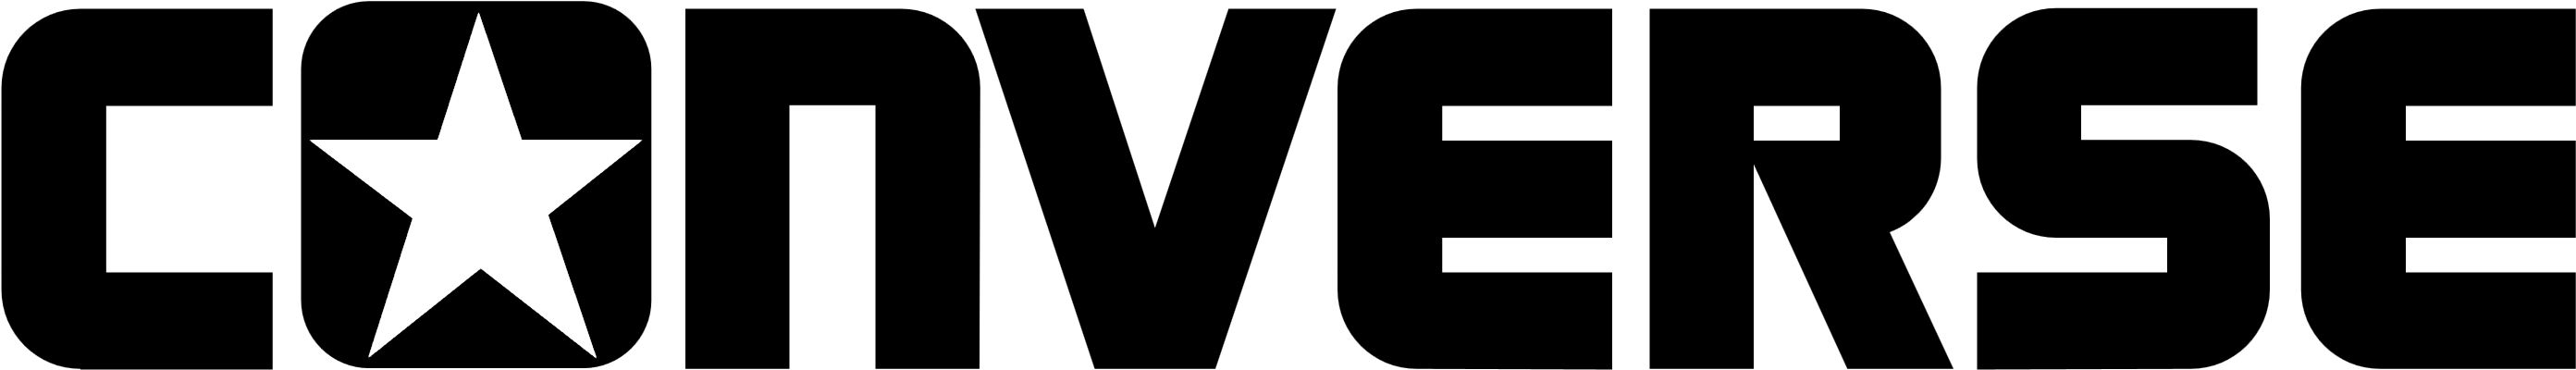 Converse Logo Download PNG Image